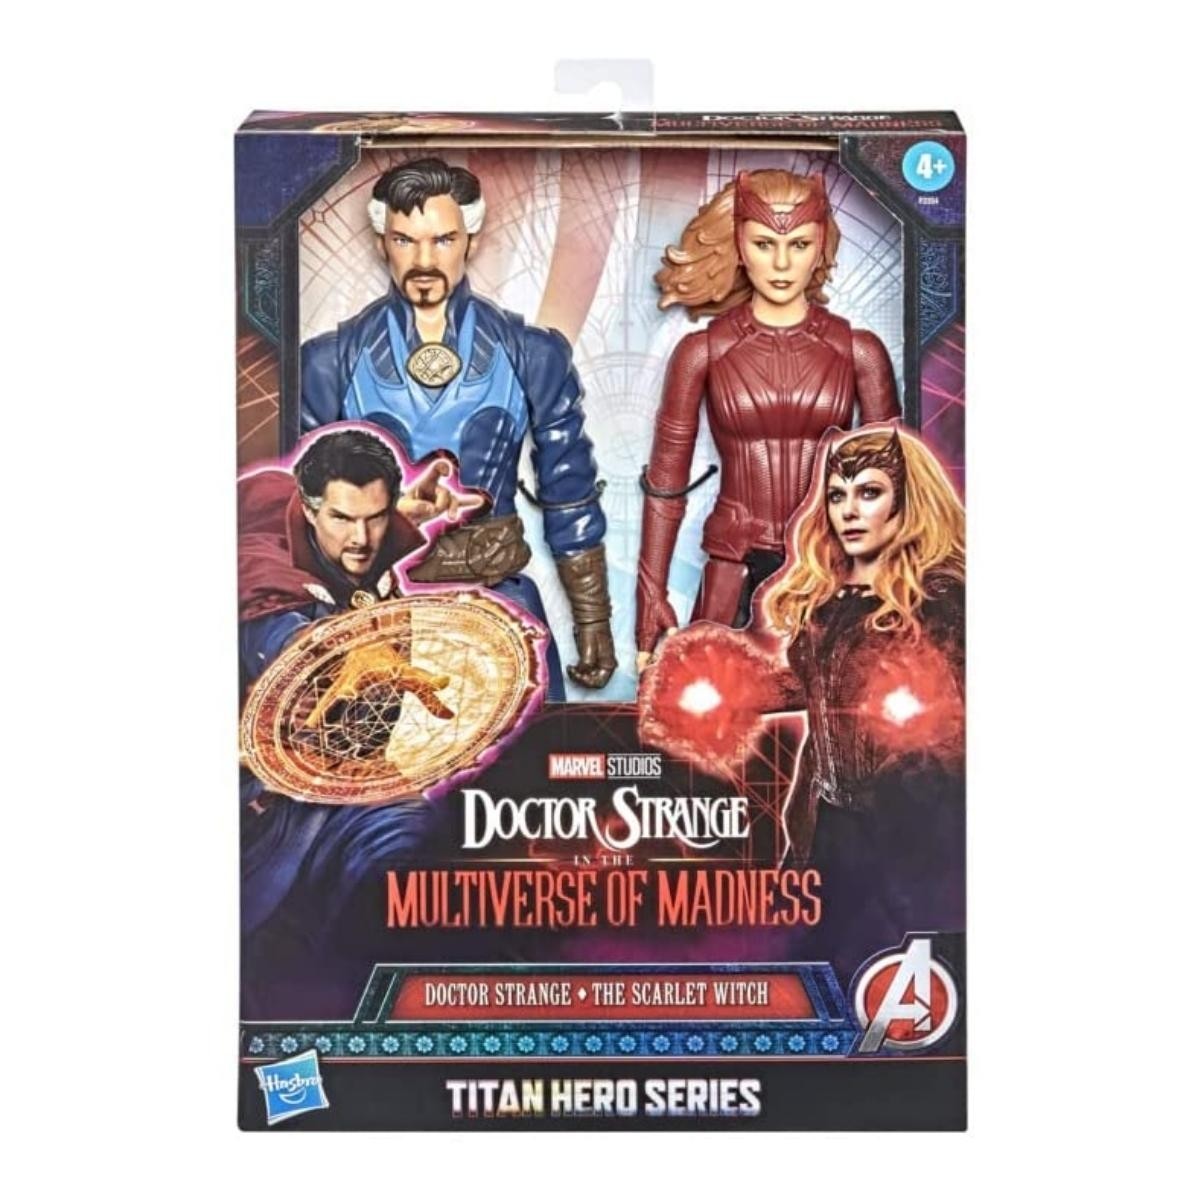 Bonecos Marvel Avengers Titan Hero Series - Doctor Strange e The Scarlet Witch - Hasbro